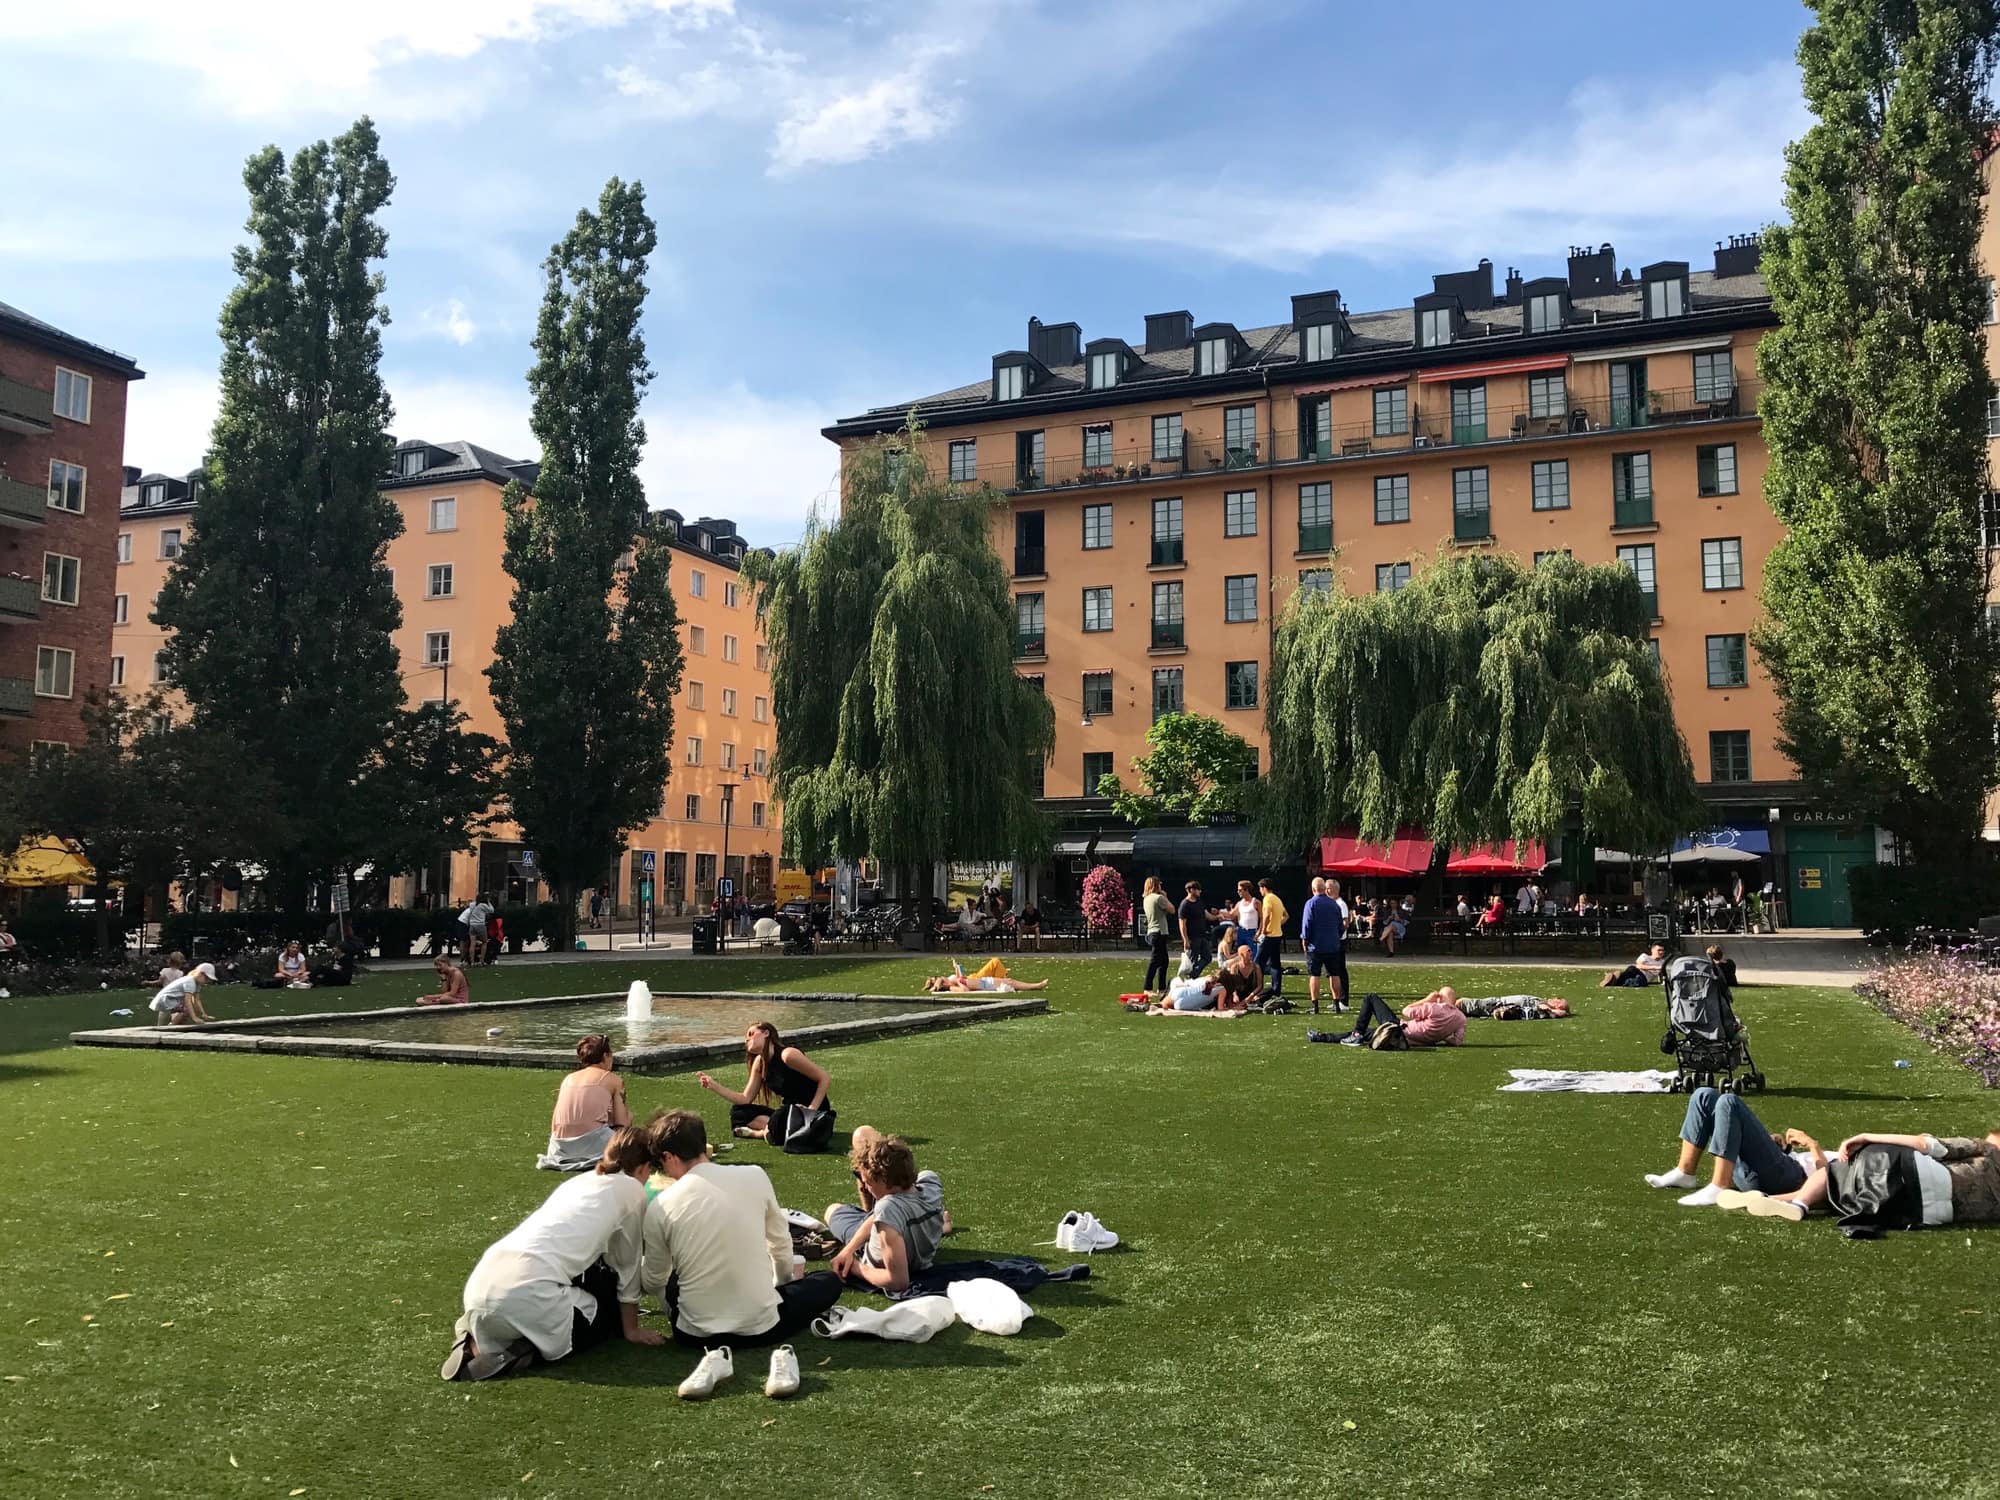 a park in Sweden